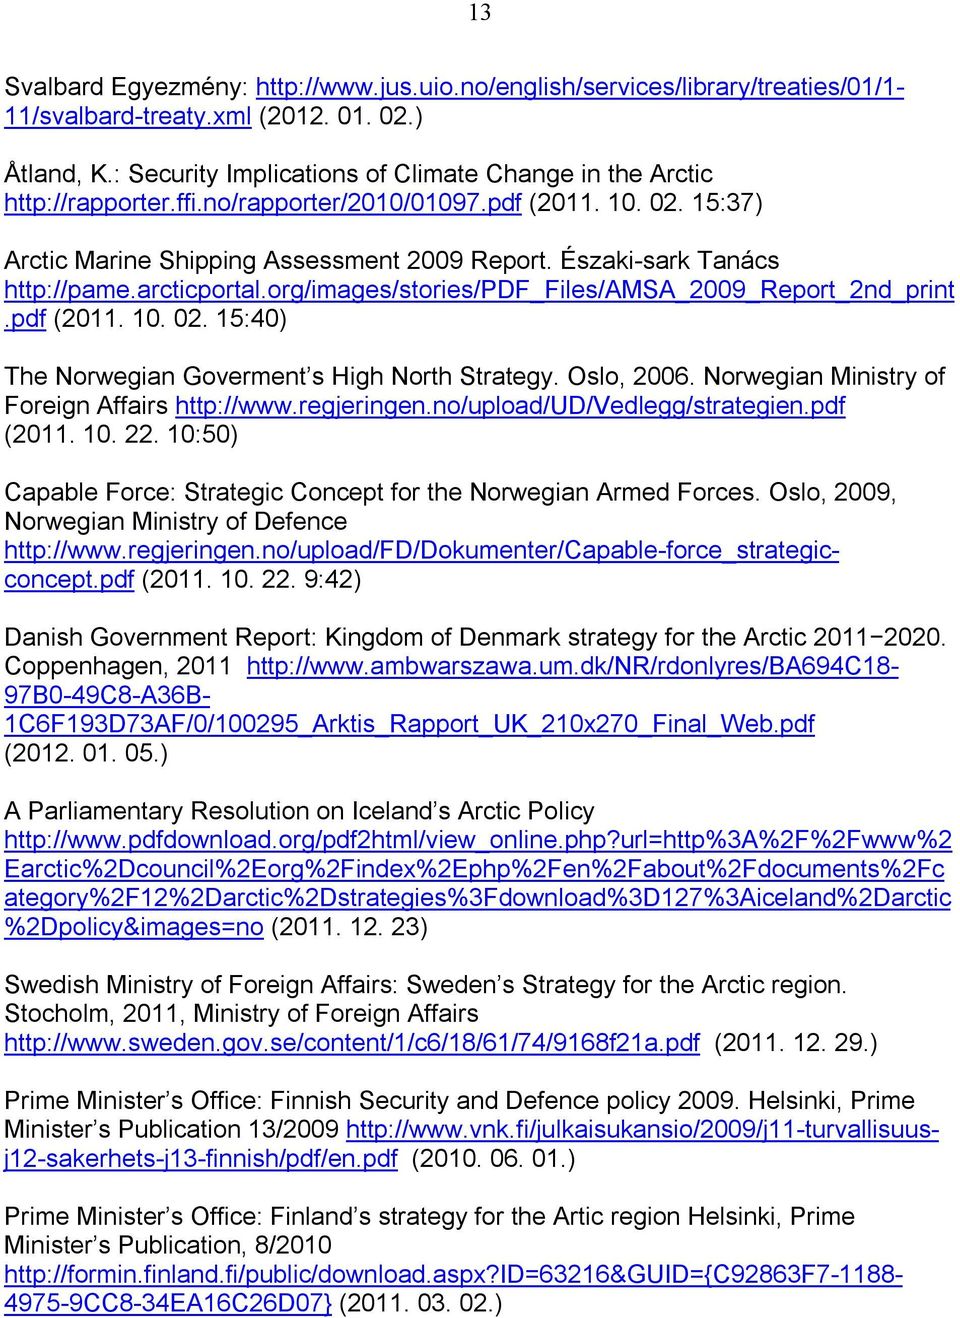 Északi-sark Tanács http://pame.arcticportal.org/images/stories/pdf_files/amsa_2009_report_2nd_print.pdf (2011. 10. 02. 15:40) The Norwegian Goverment s High North Strategy. Oslo, 2006.